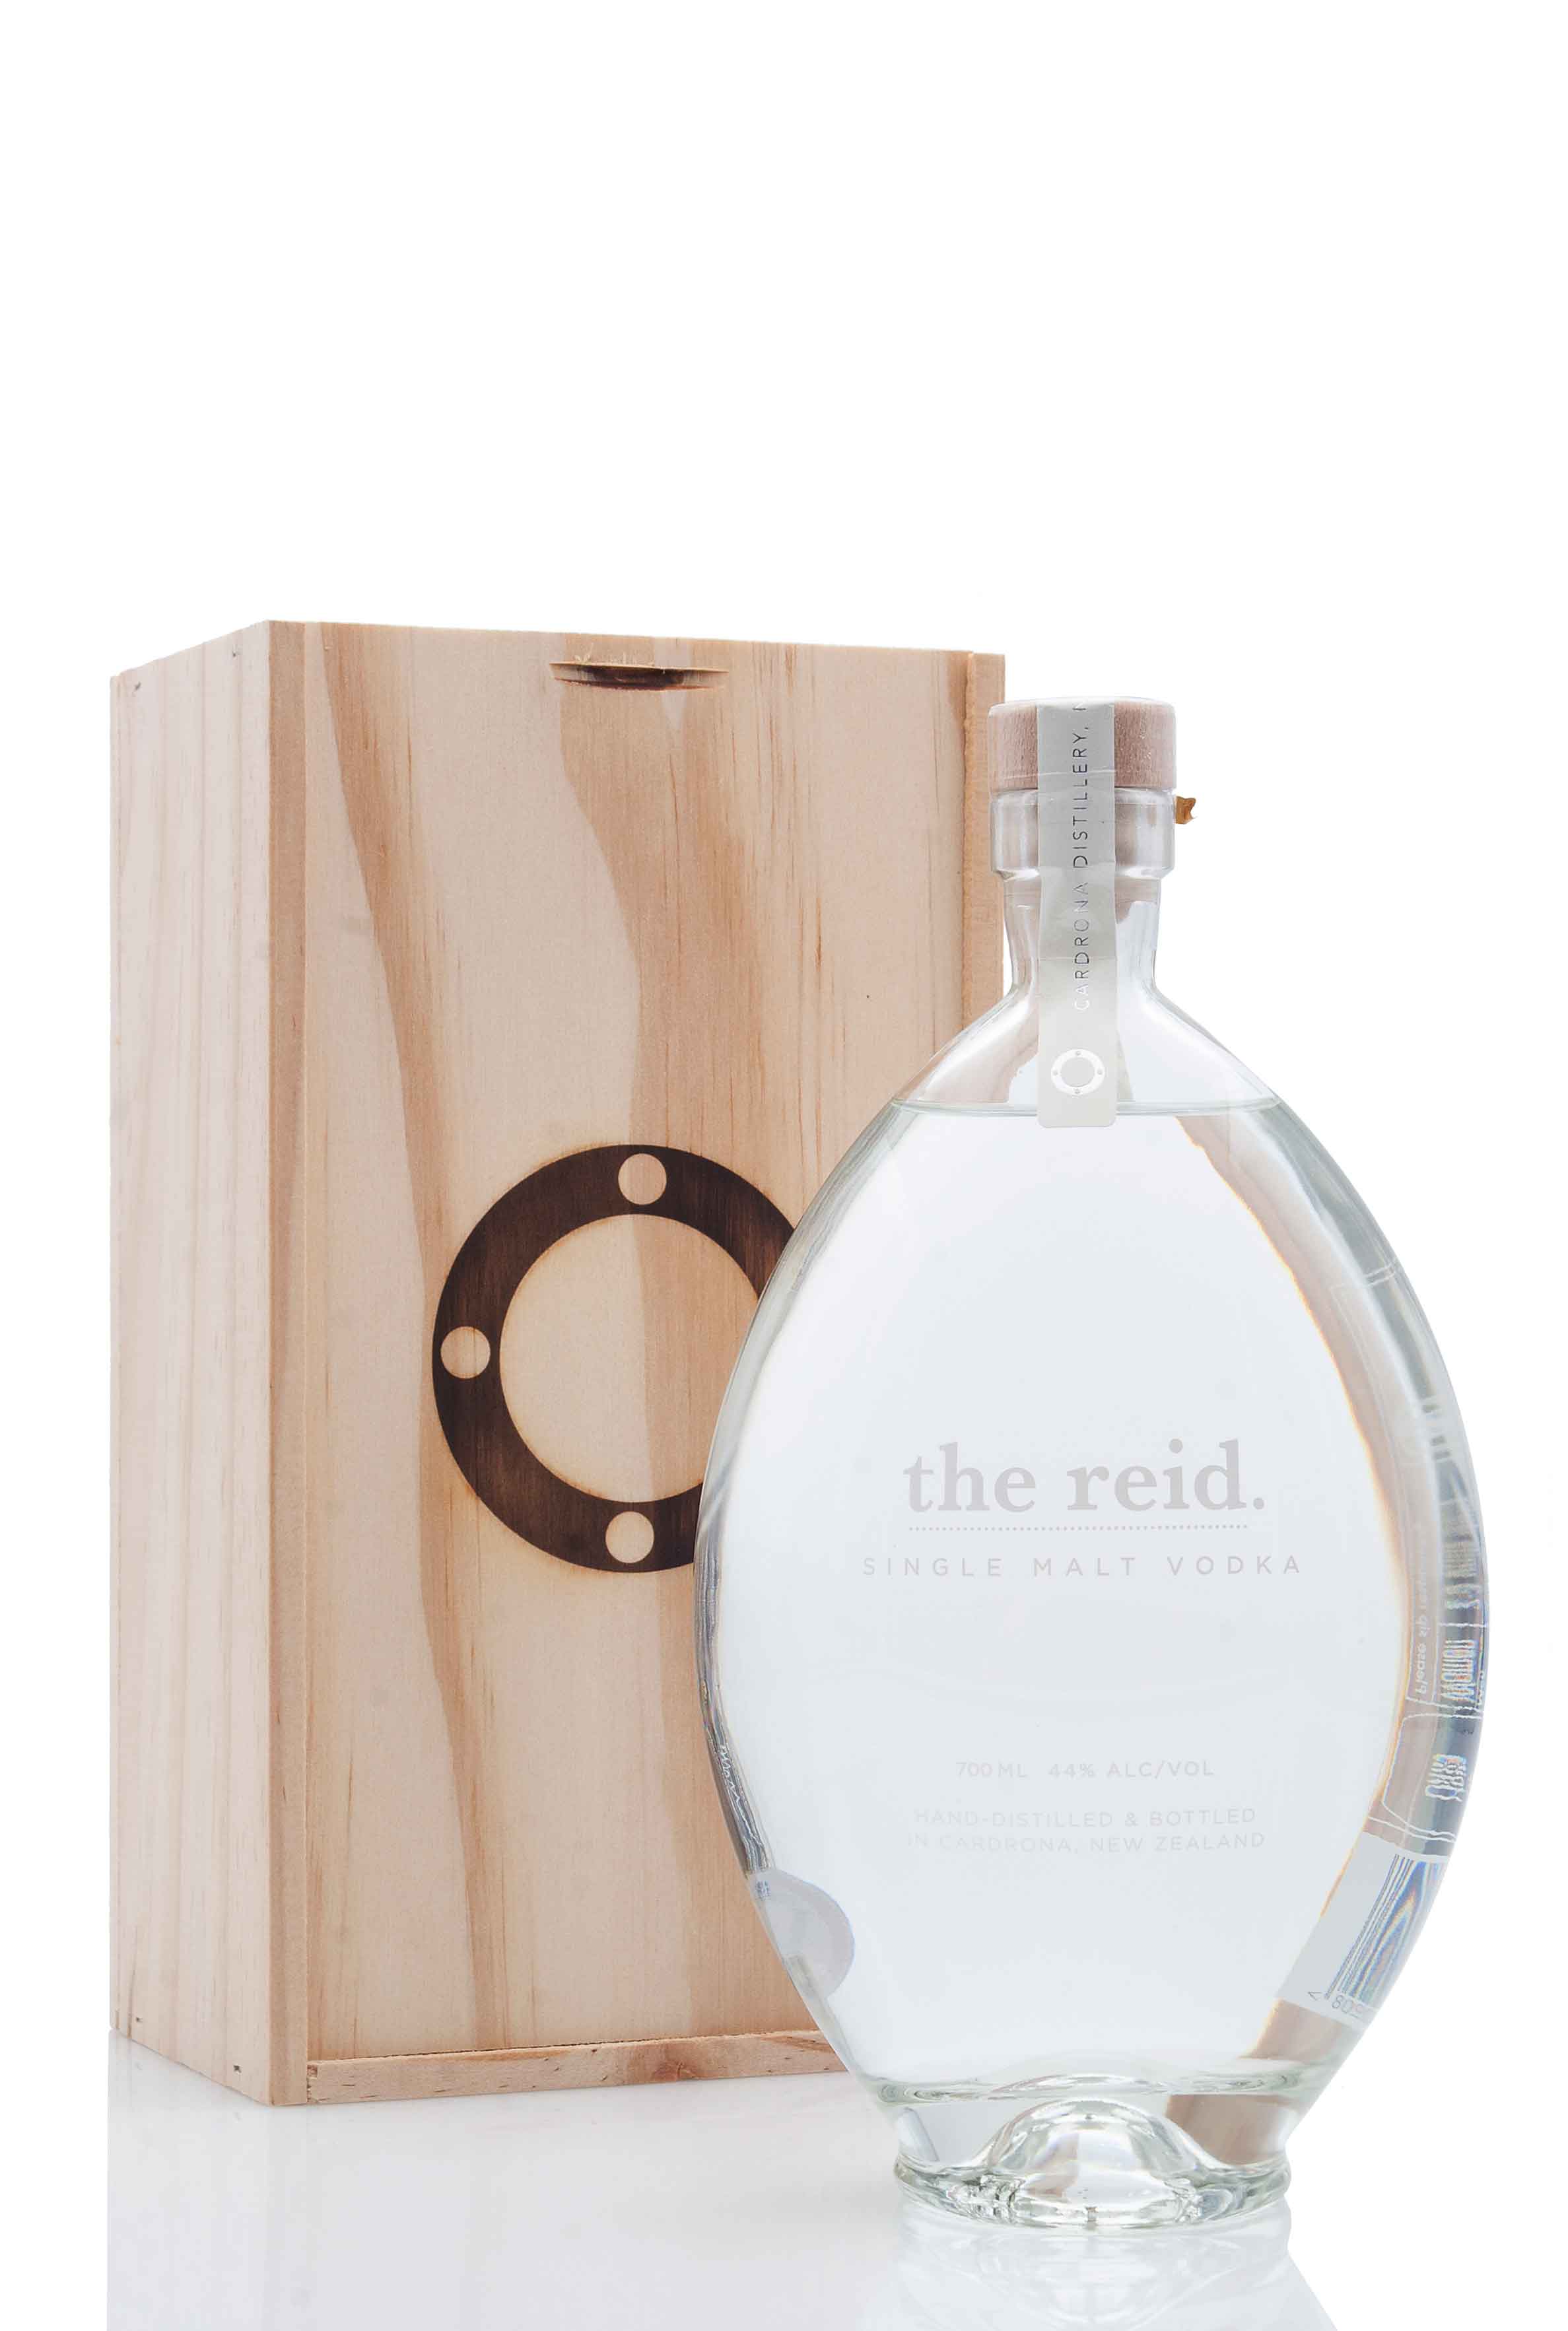 The Reid Single Malt Vodka Cardrona Distillery | Abbey Whisky